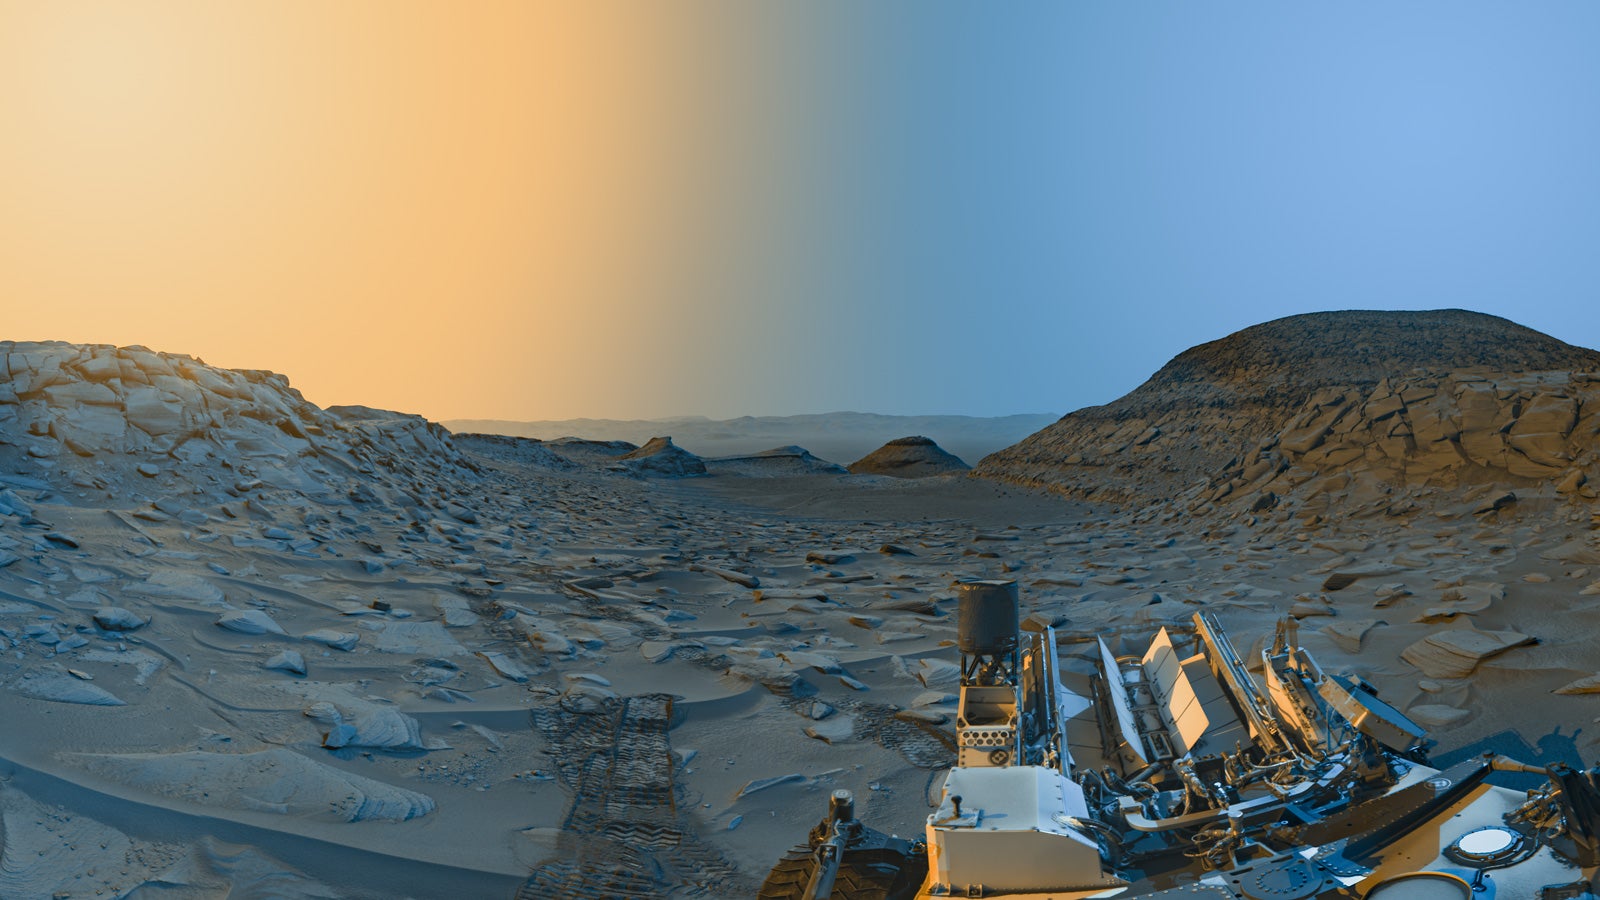 Image: NASA/JPL-Caltech